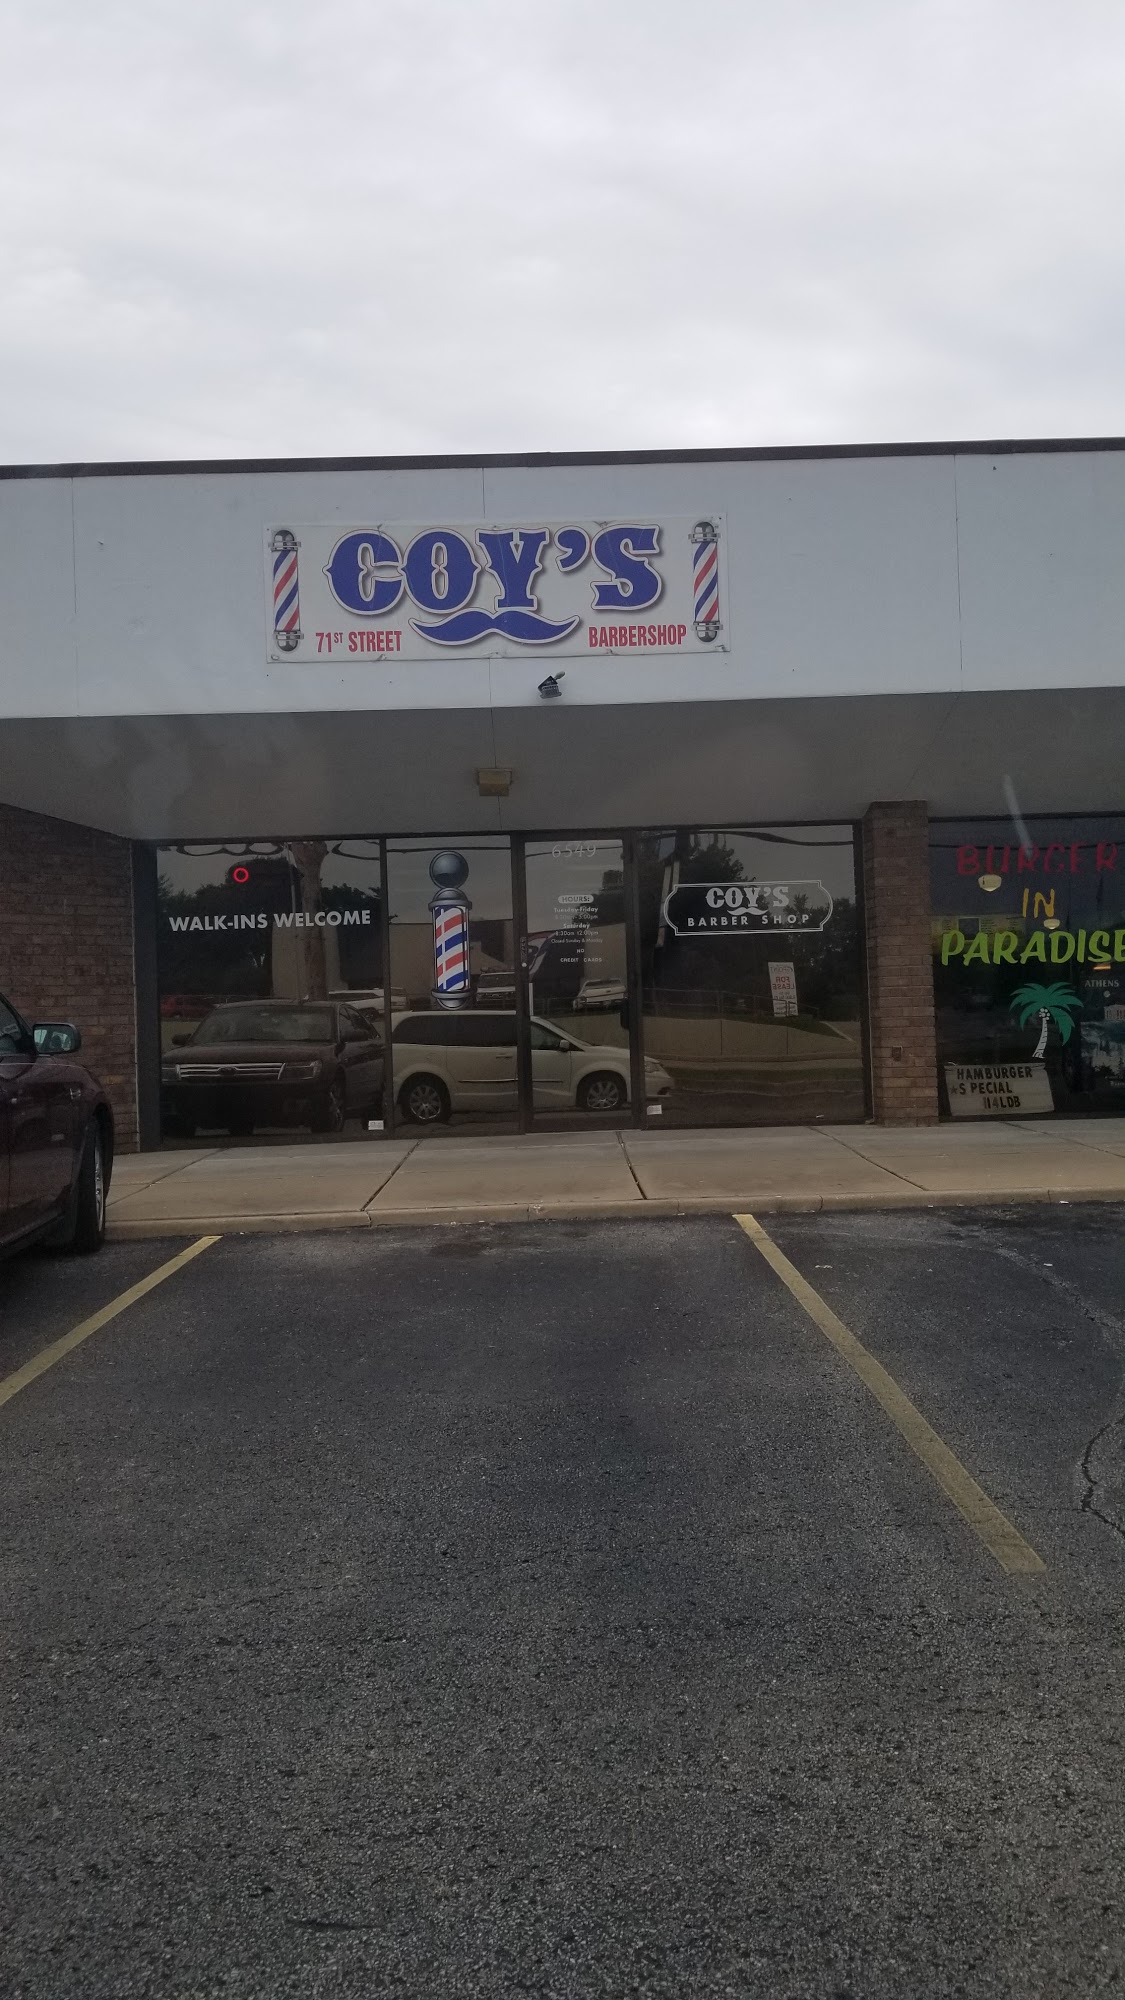 Coy's 71st Street Barbershop